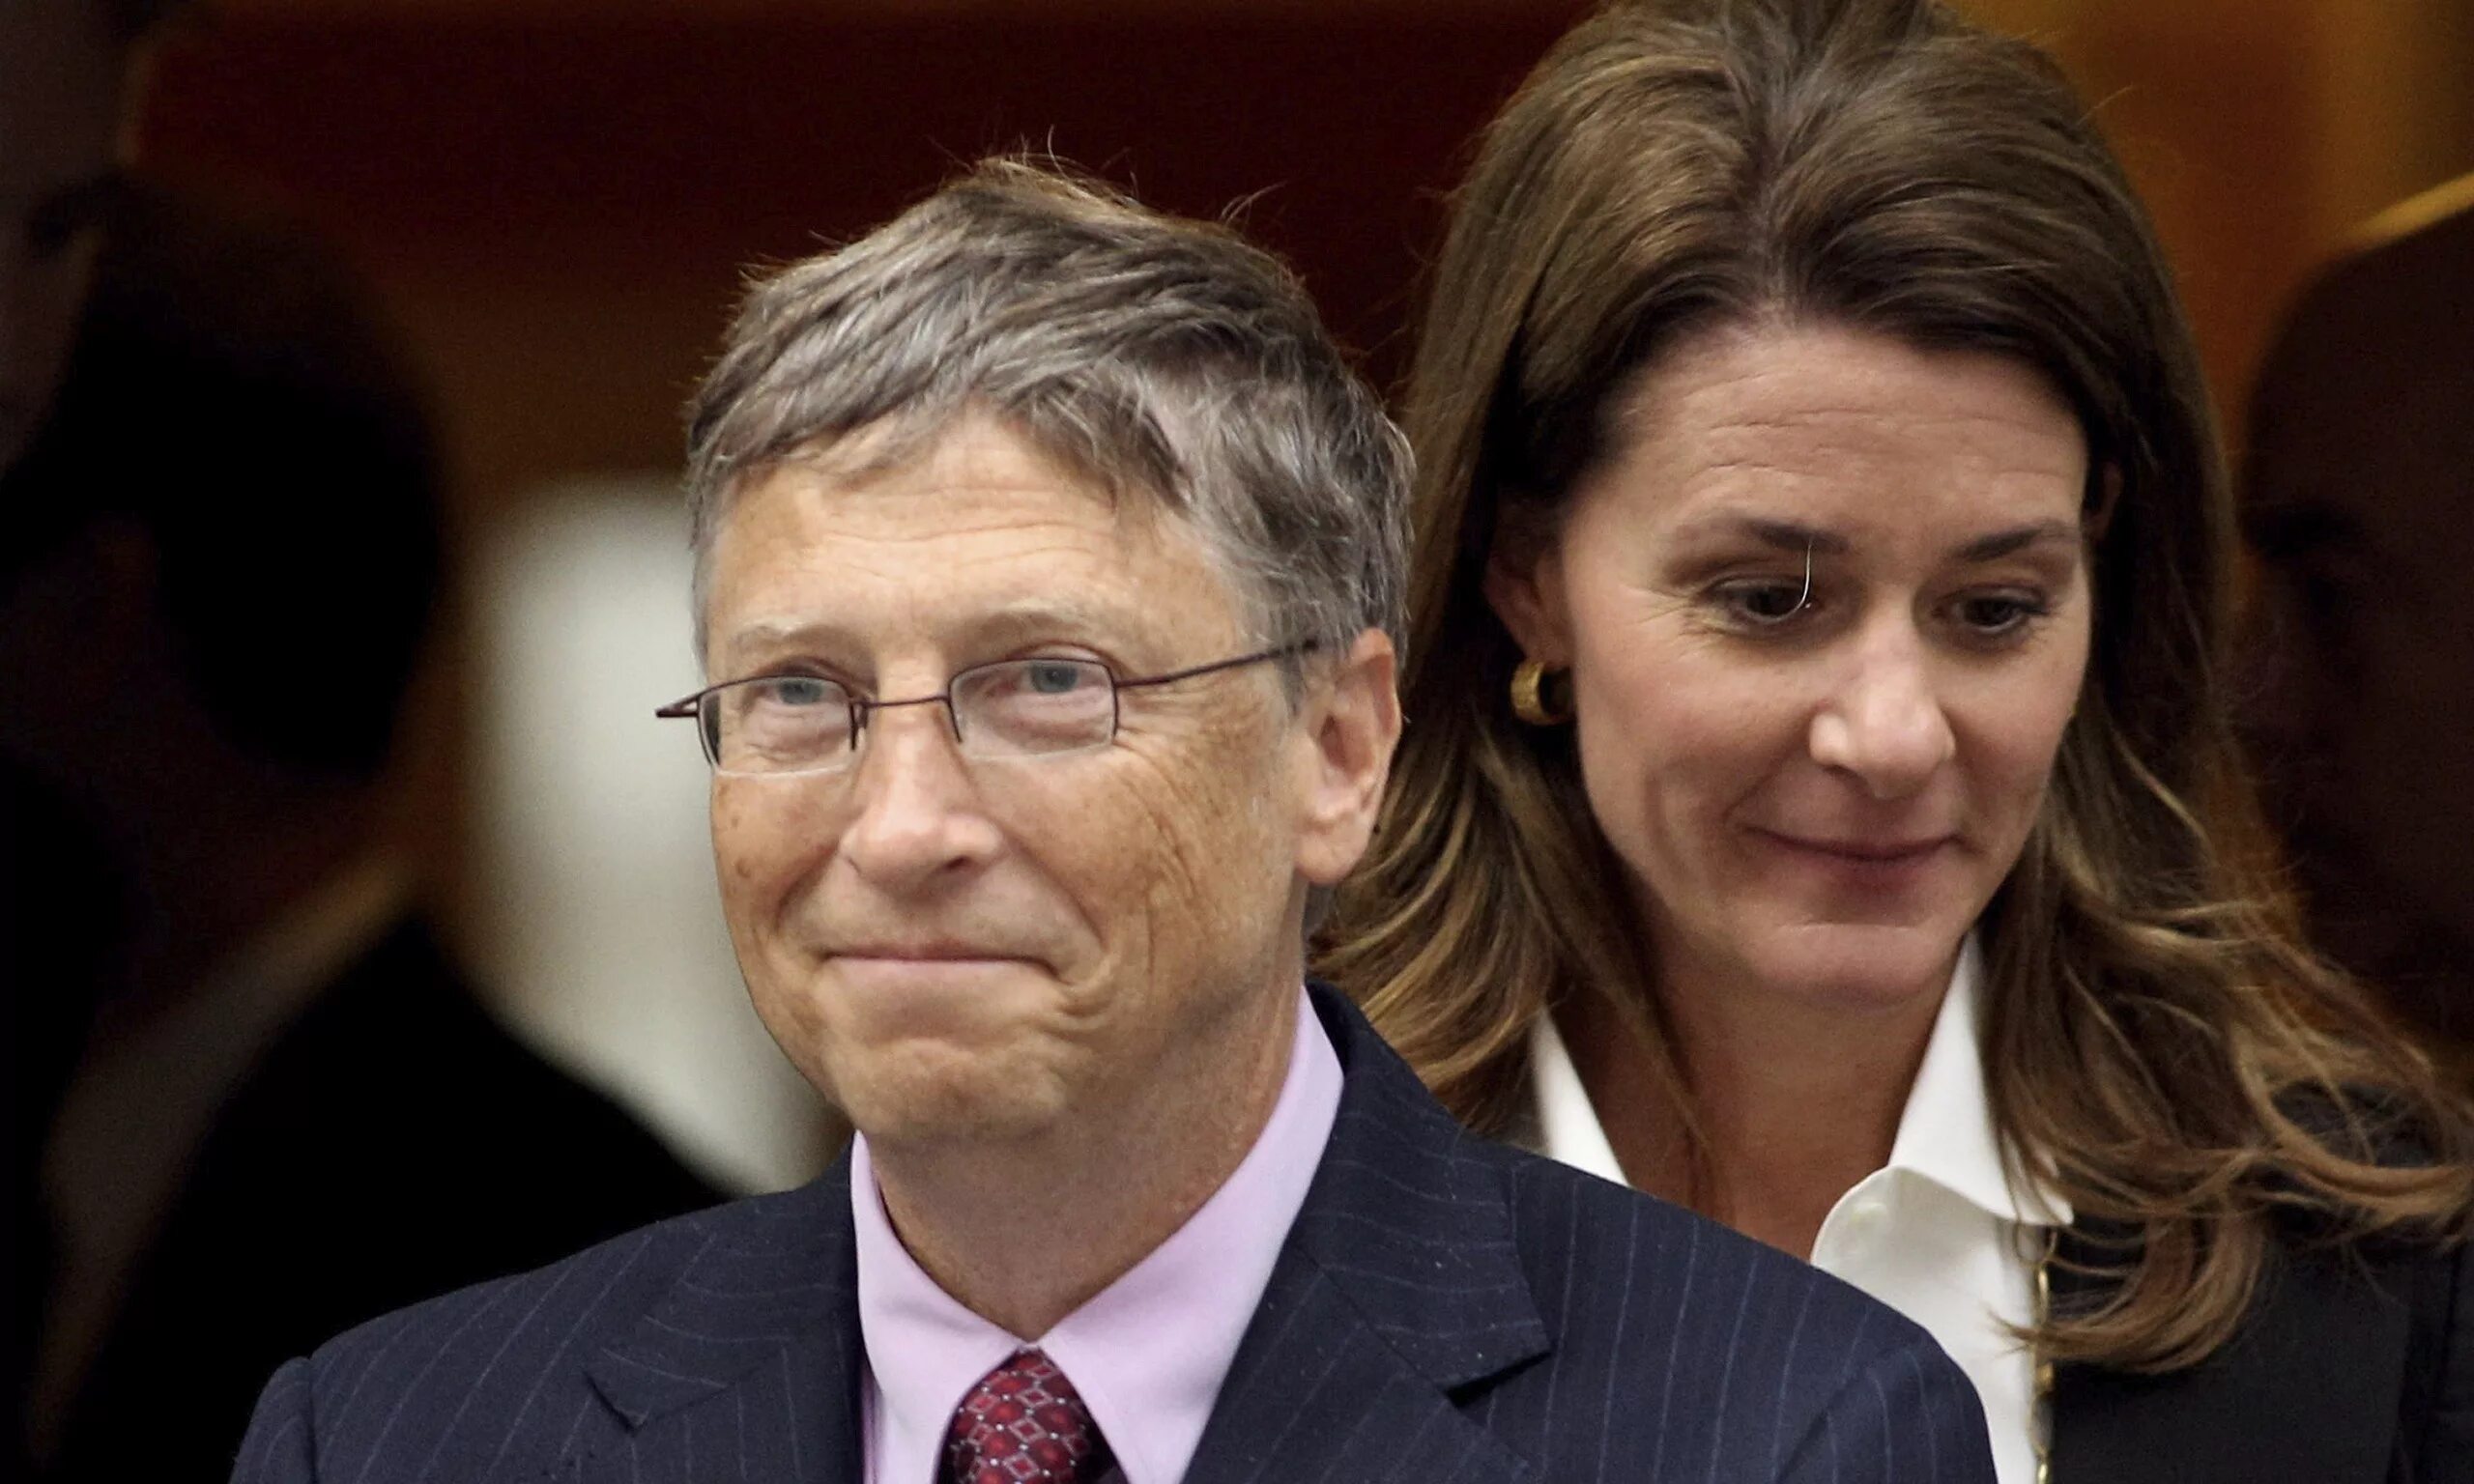 Билл Гейтс и Мелинда. Мелинда Гейтс в молодости. Жена Билла Гейтса Мелинда. Билл и Мелинда Гейтс в молодости. Жена билла гейтса